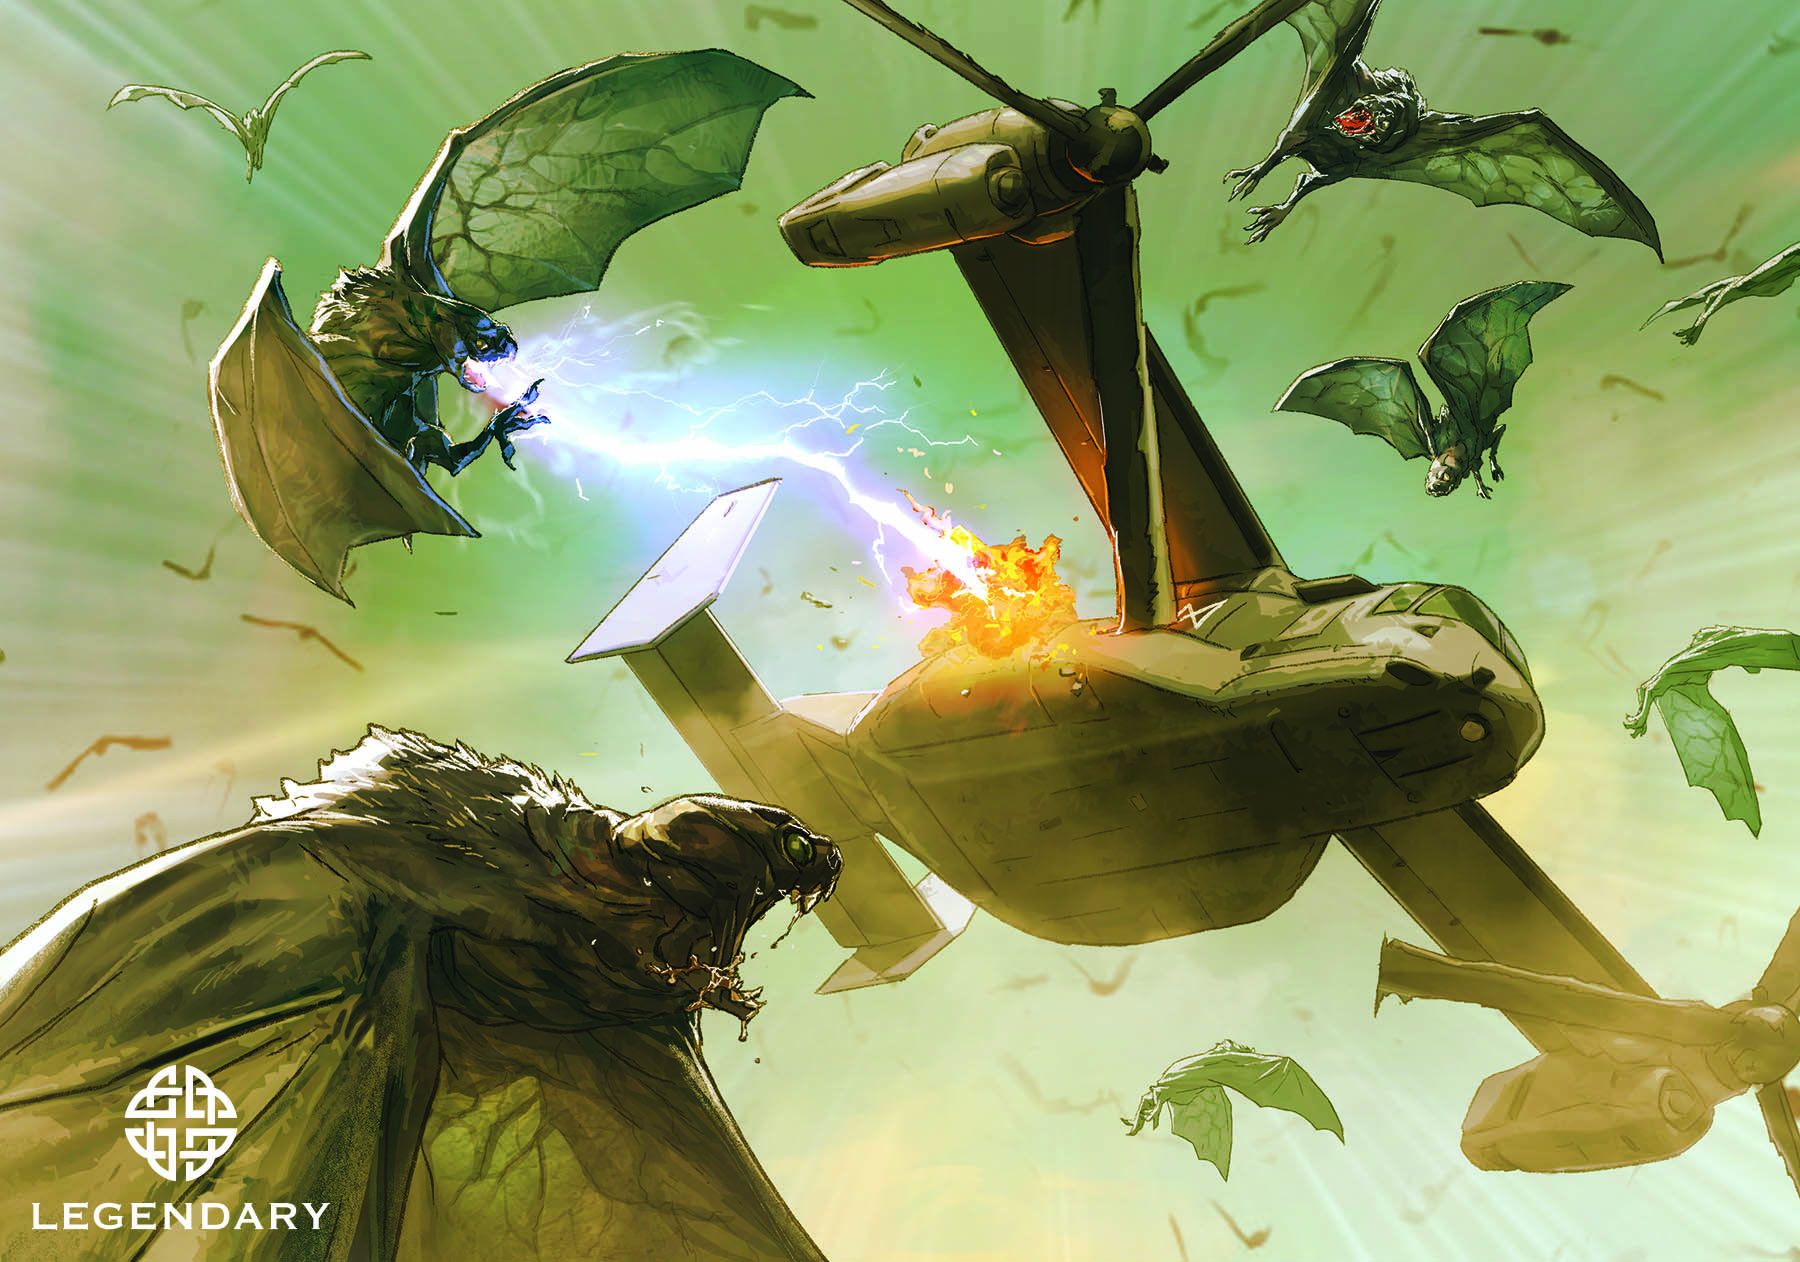 Kong: Skull Island Comic Book - Flying Monsters